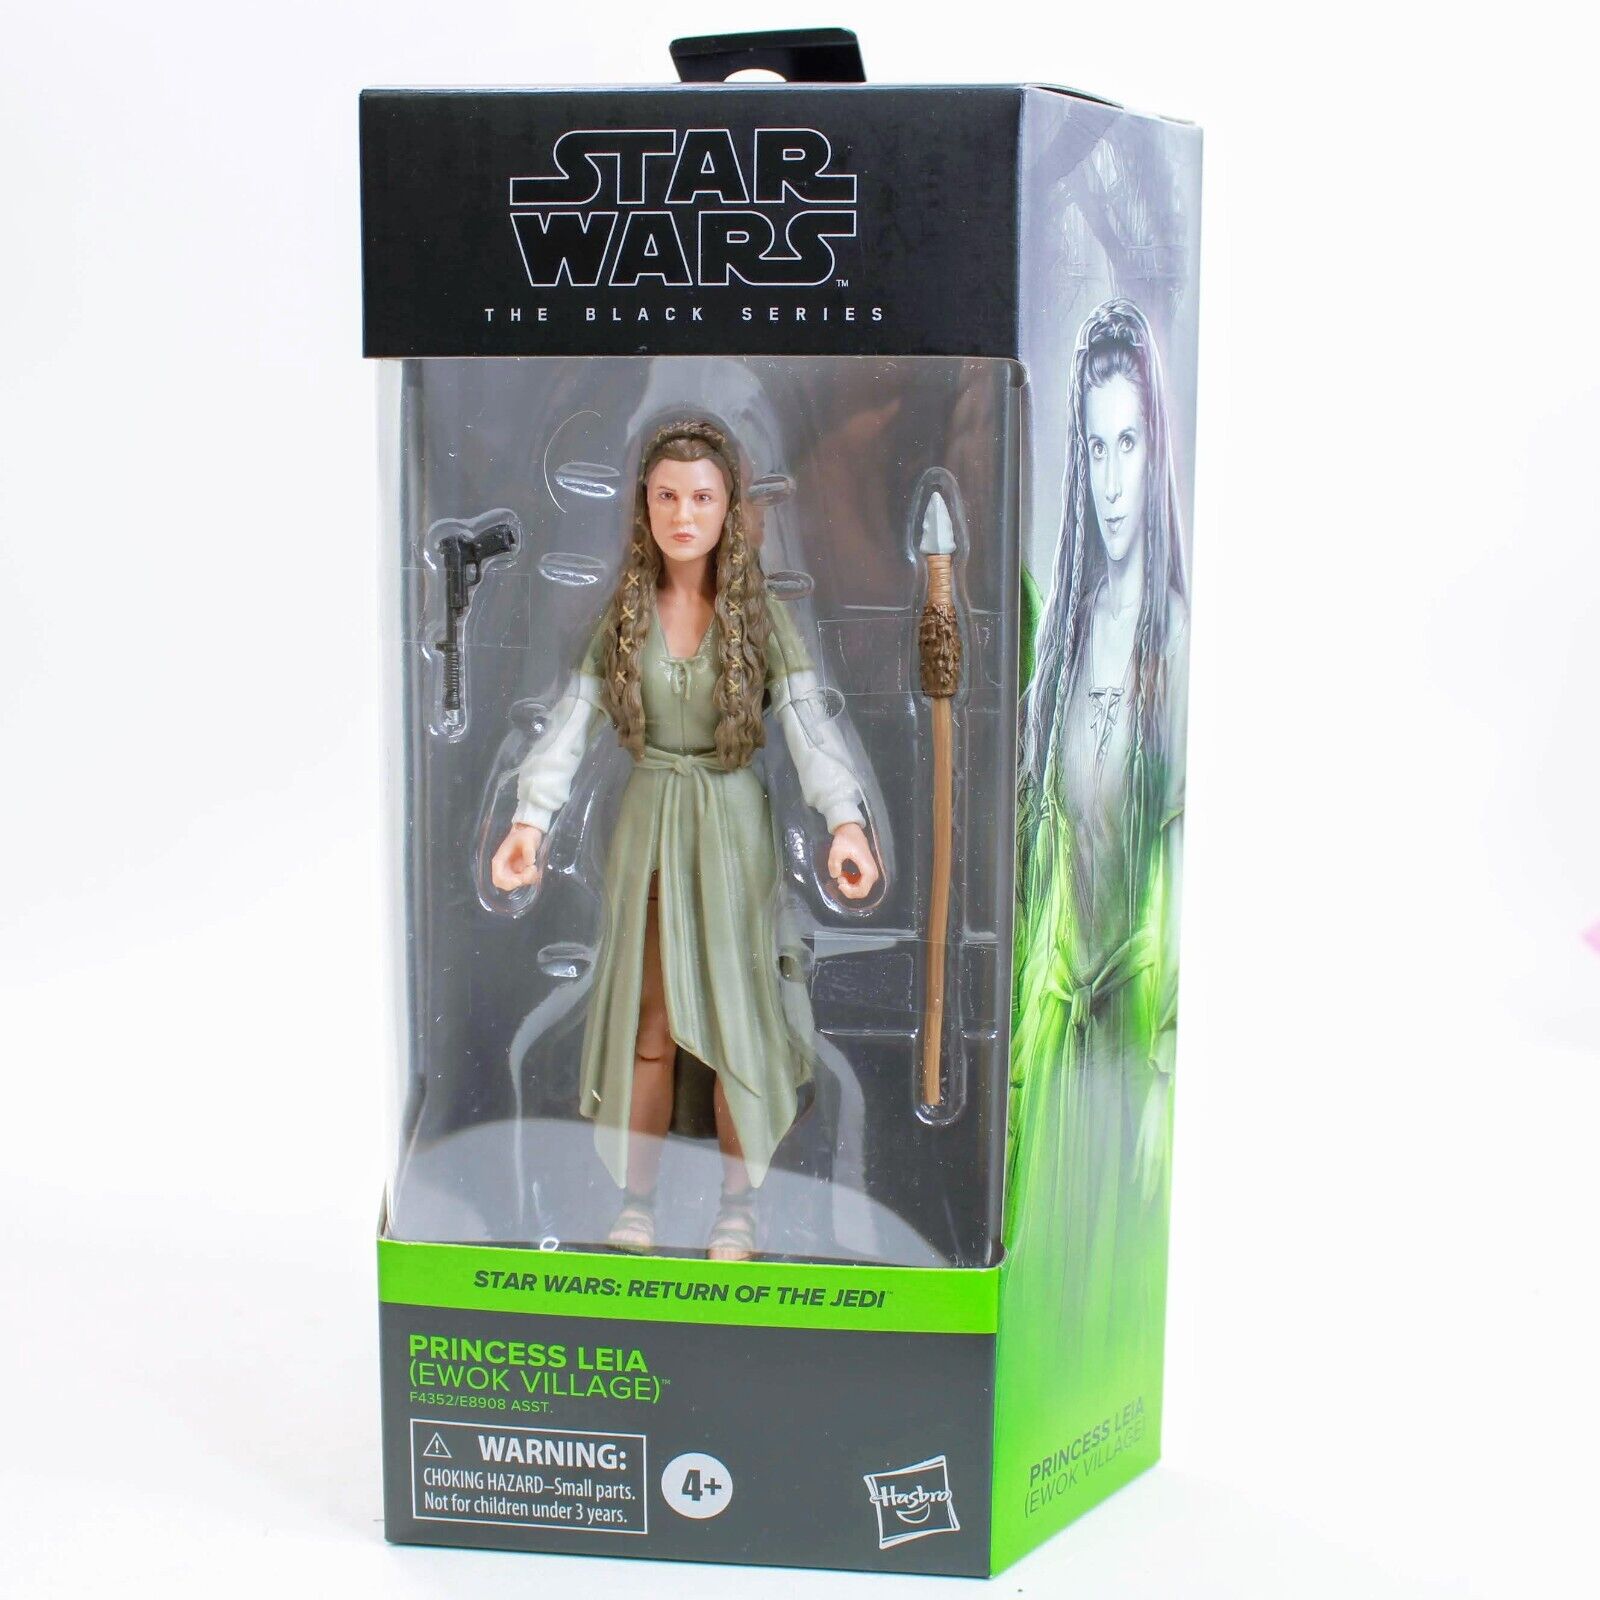 Star Wars The Black Series Ewok Village Princess Leia 6" Action Figure